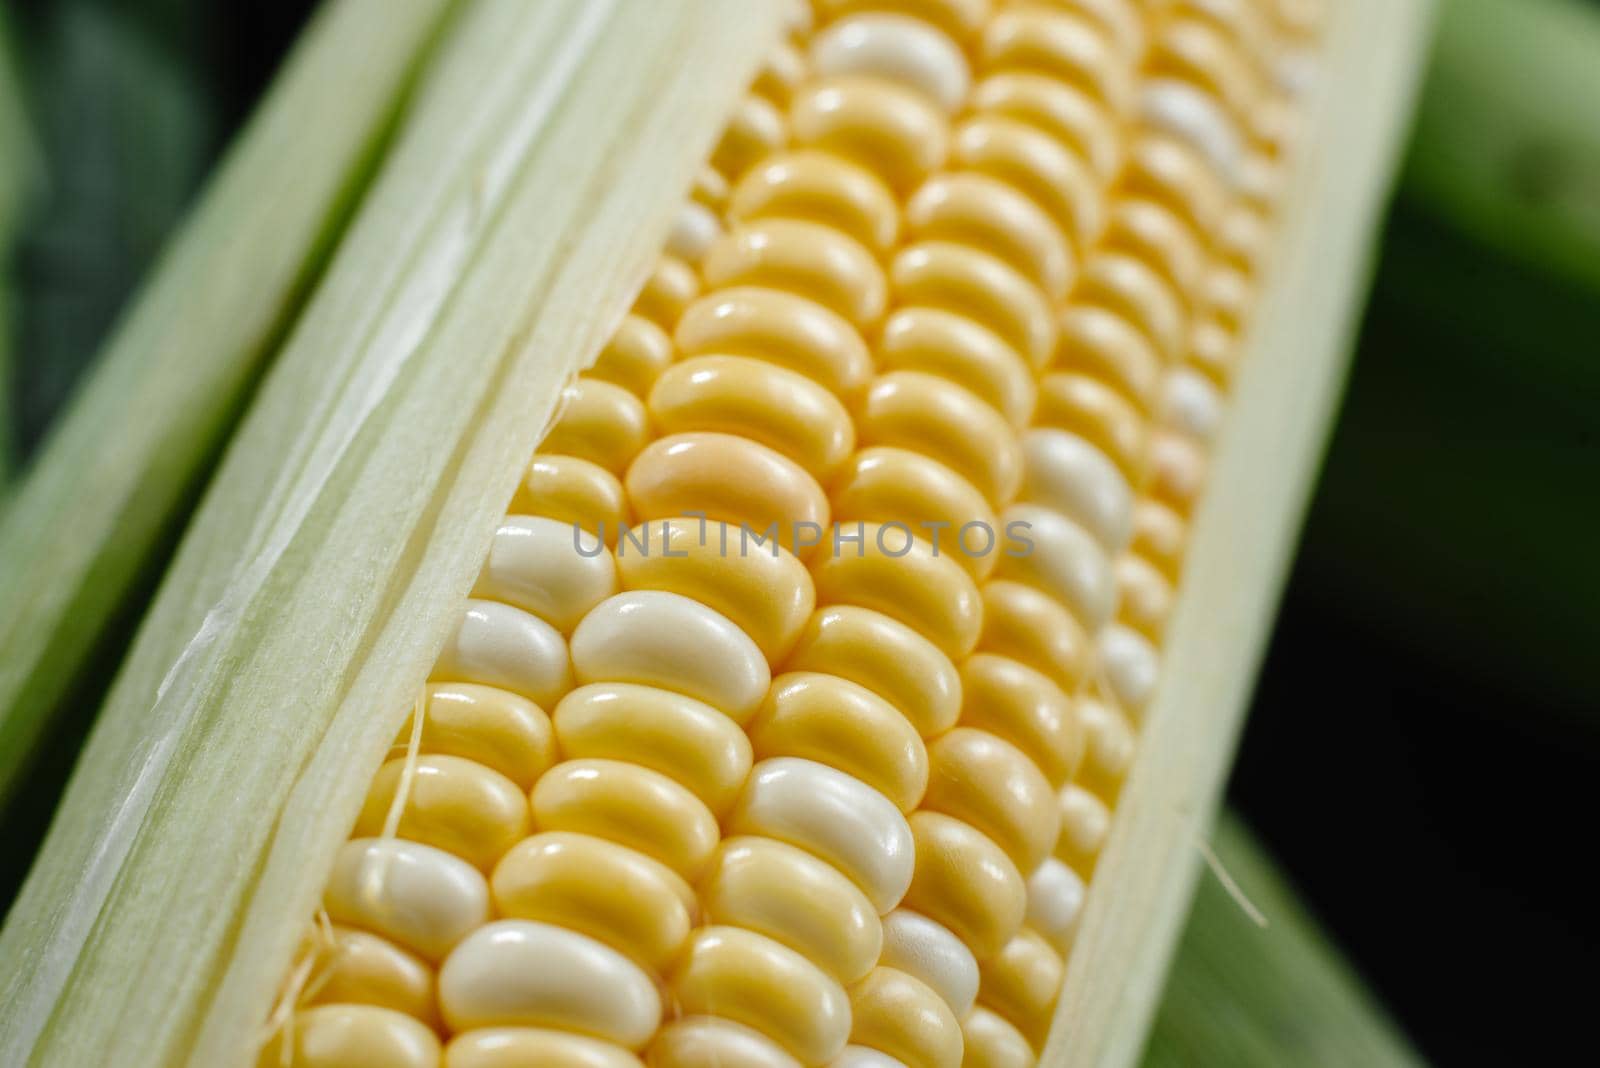 Raw corn on a dark background. Corn cobs in leafy green.